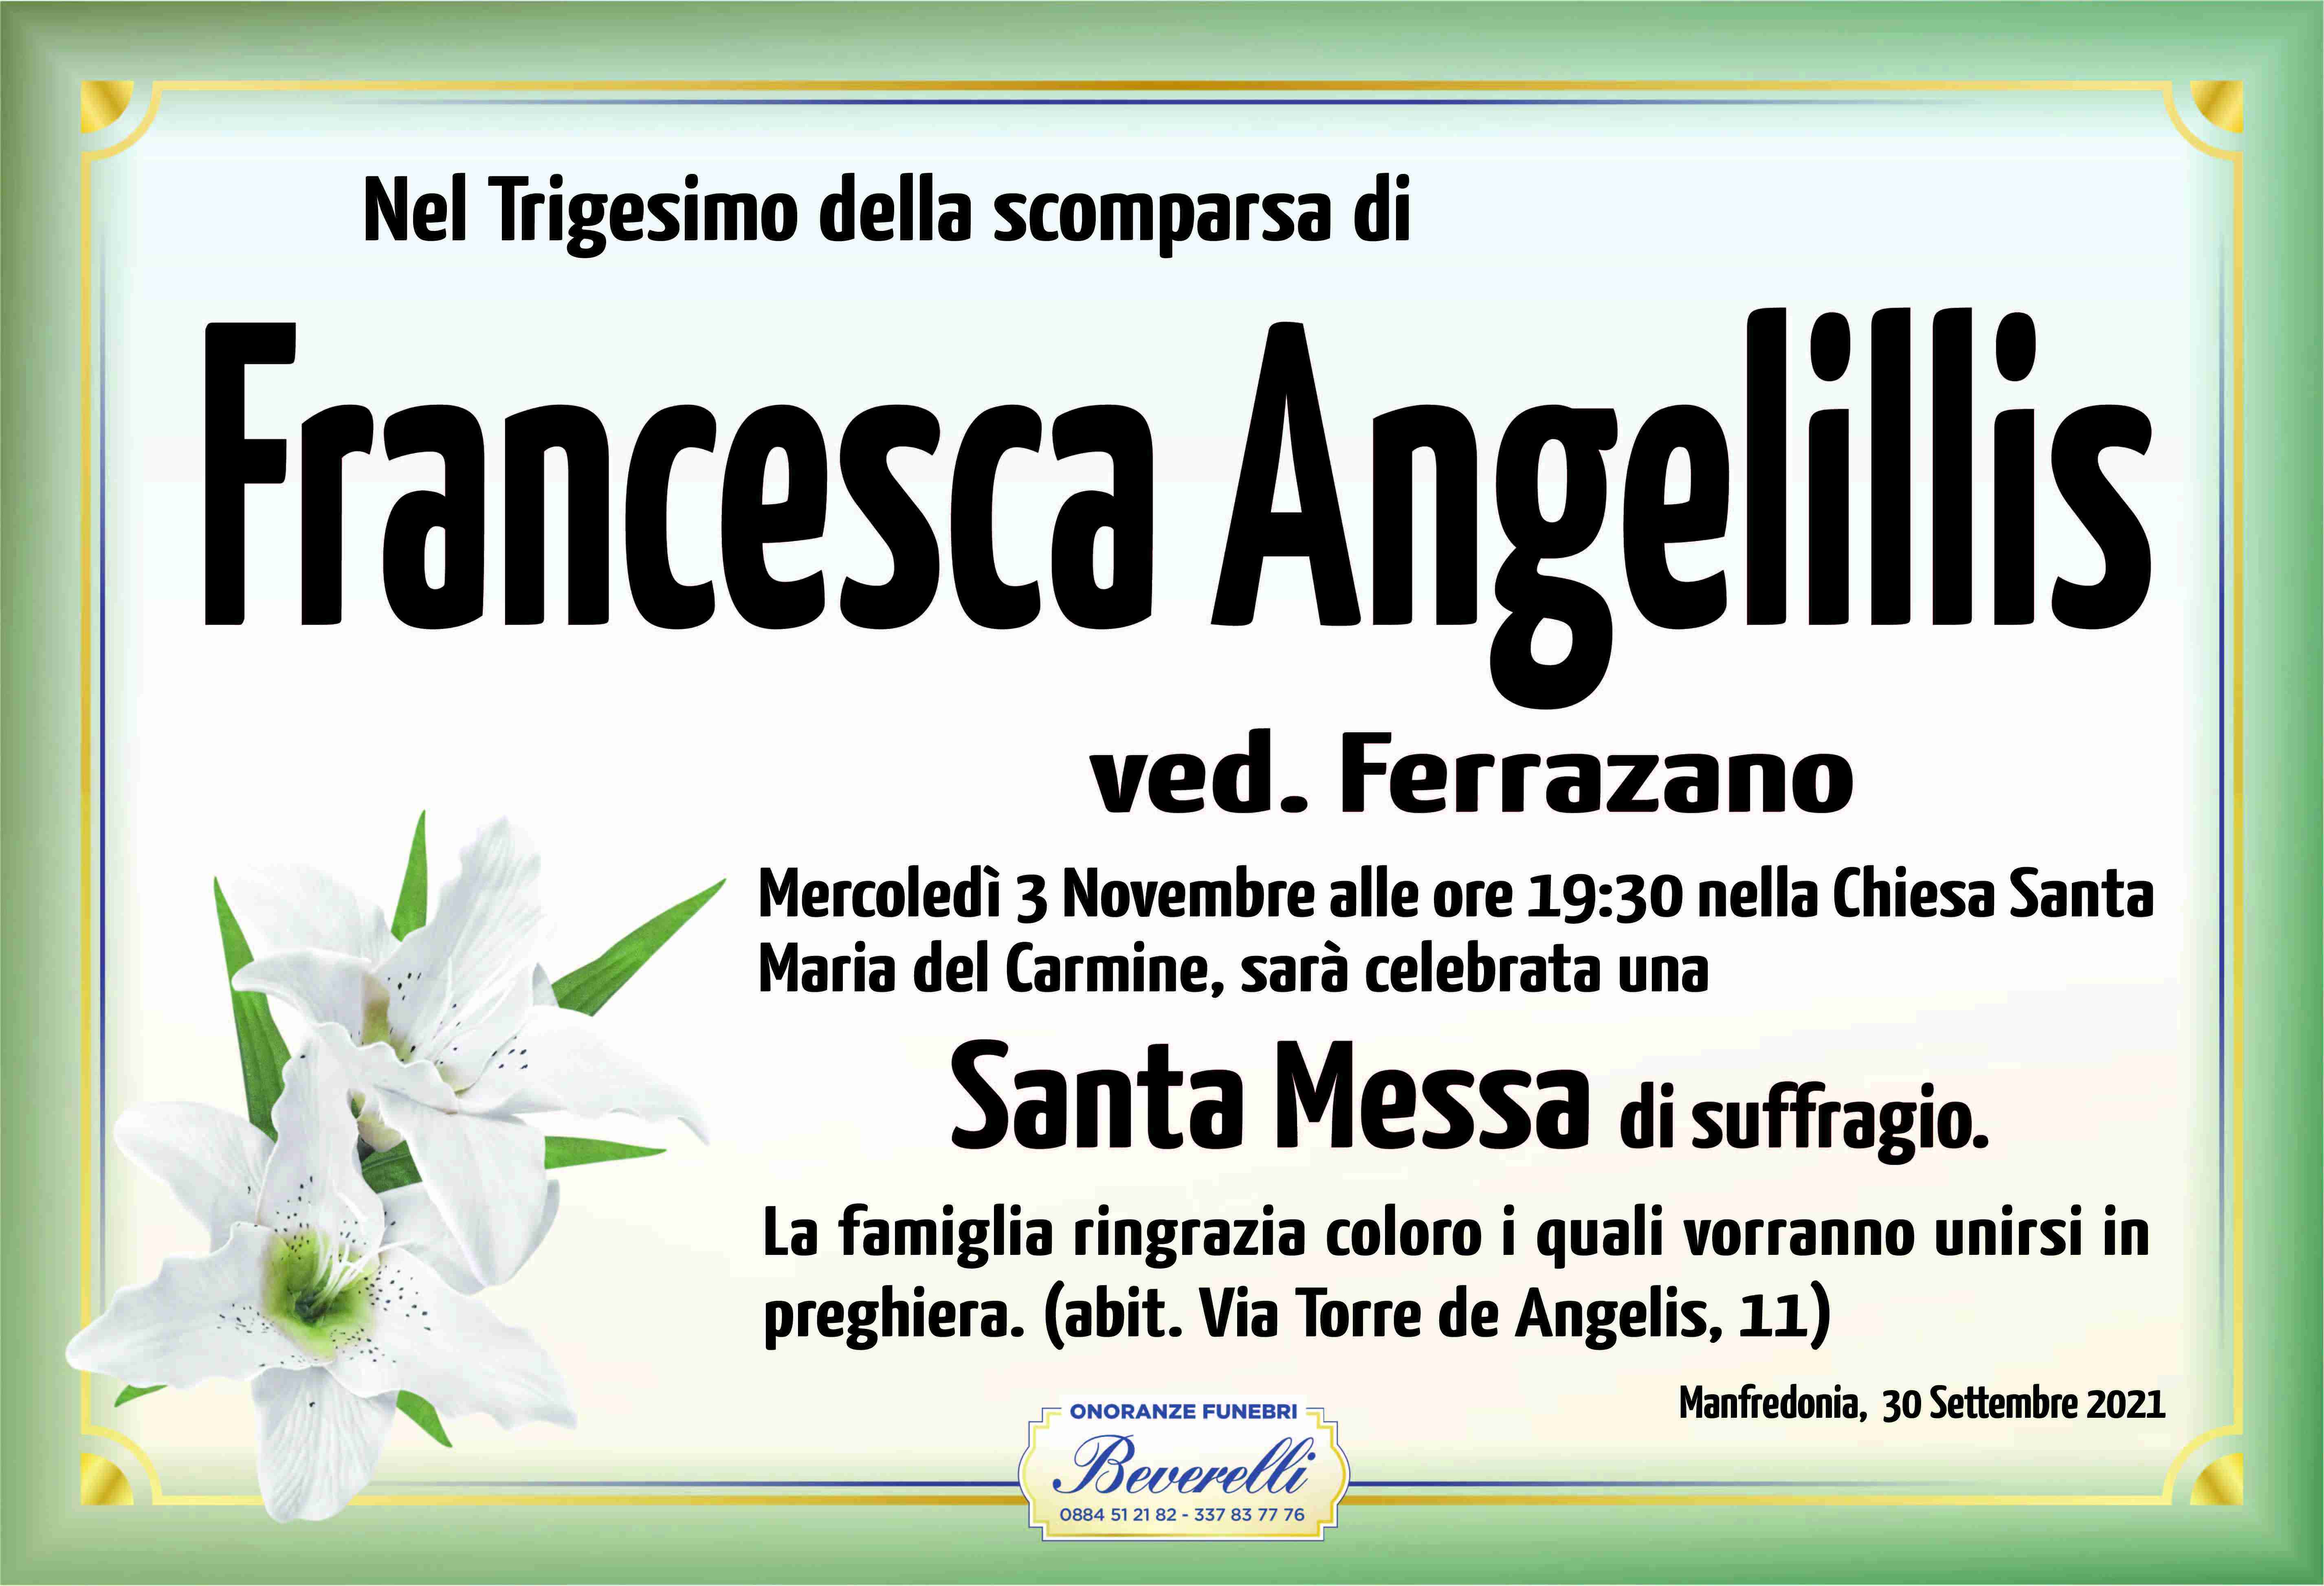 Francesca Angelillis